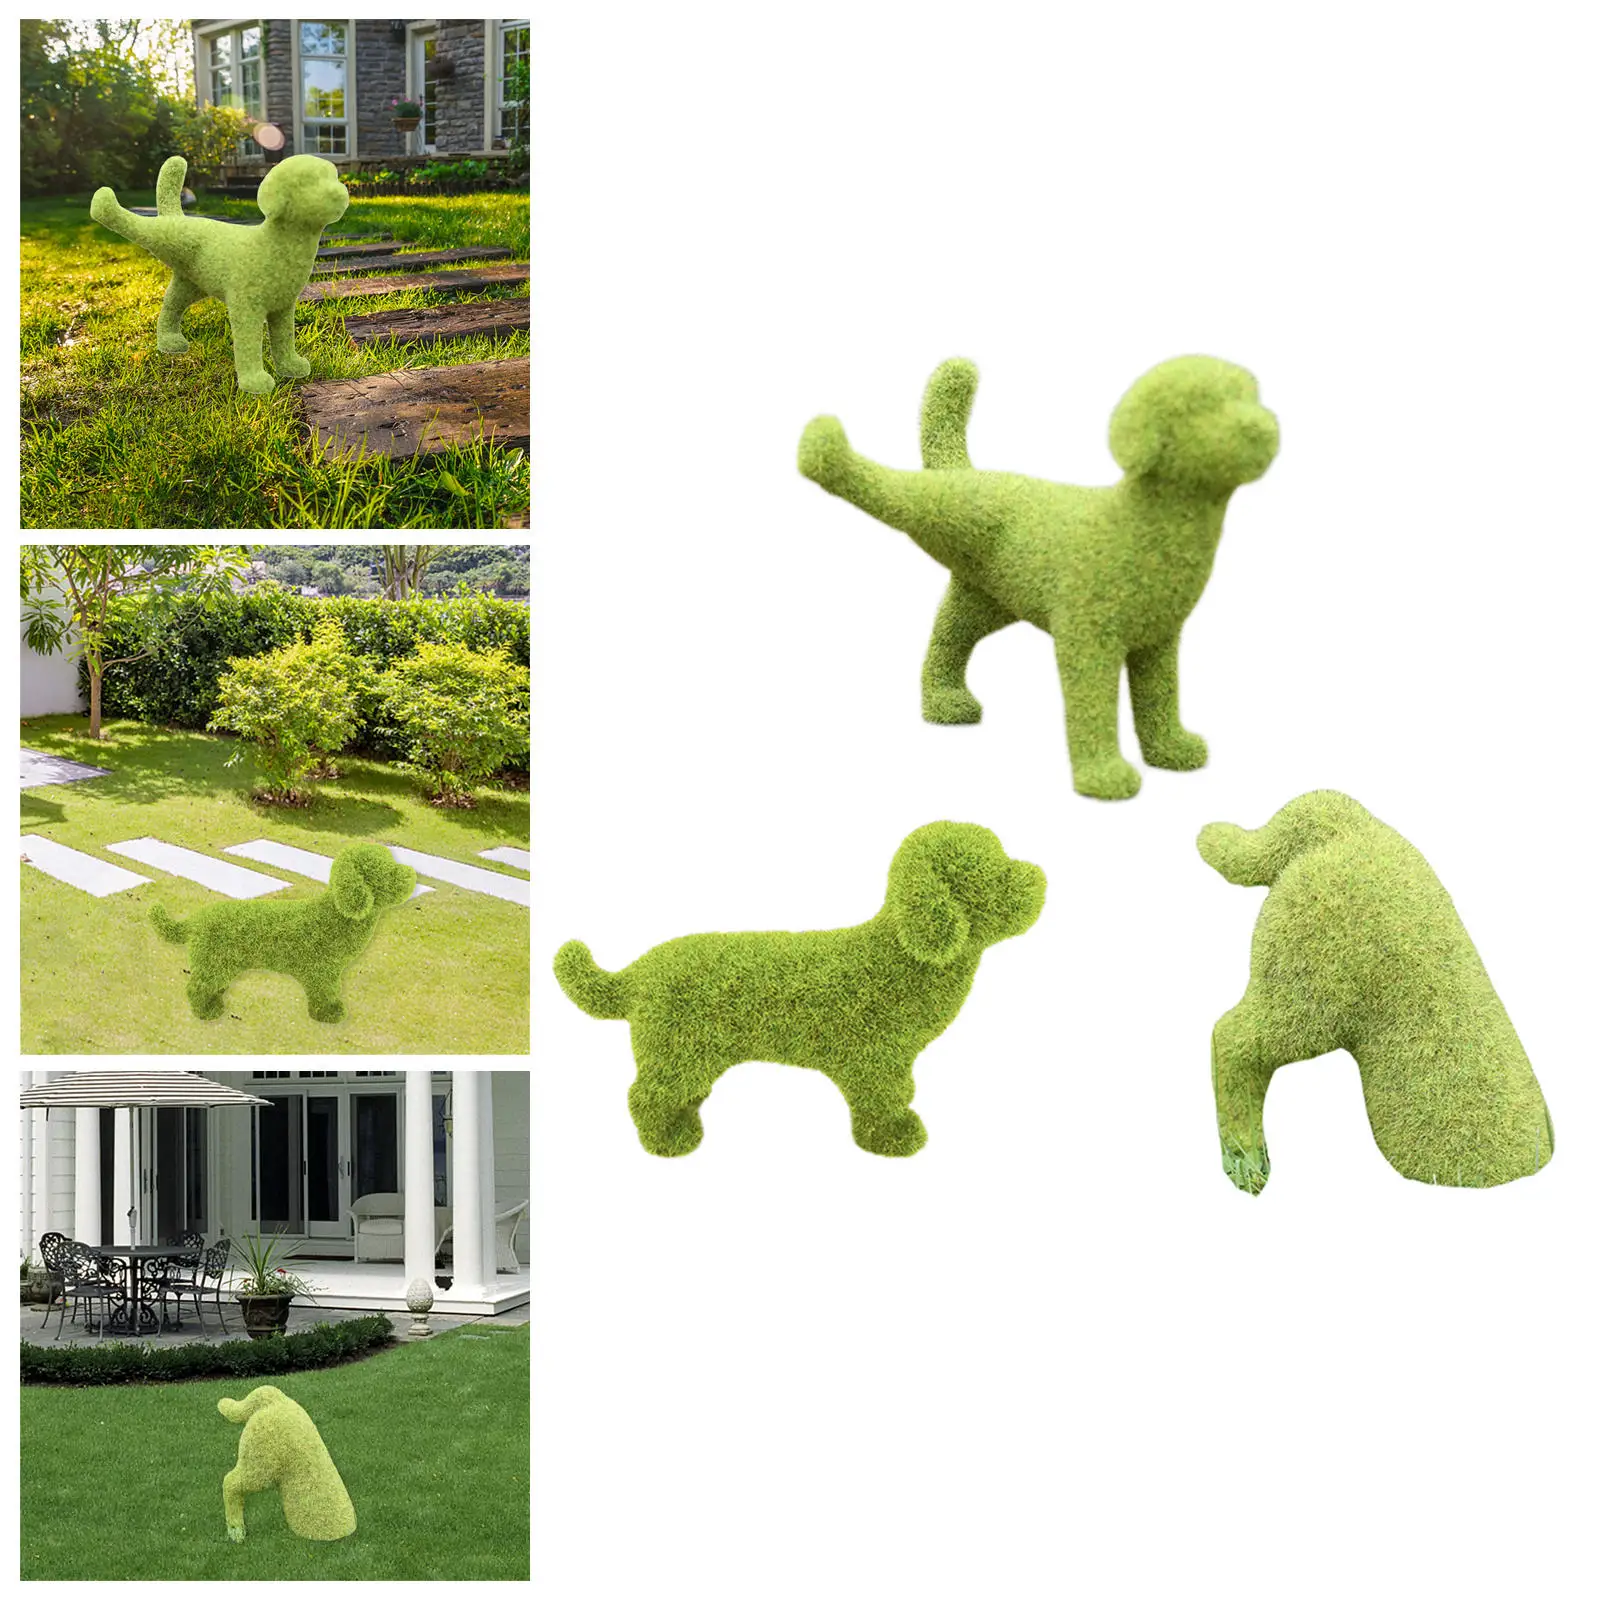 

Flocking Animal Figurines Statue Dog Ornament Artificial Green Moss Grass Mini Decor for Micro Landscap Garden Easter